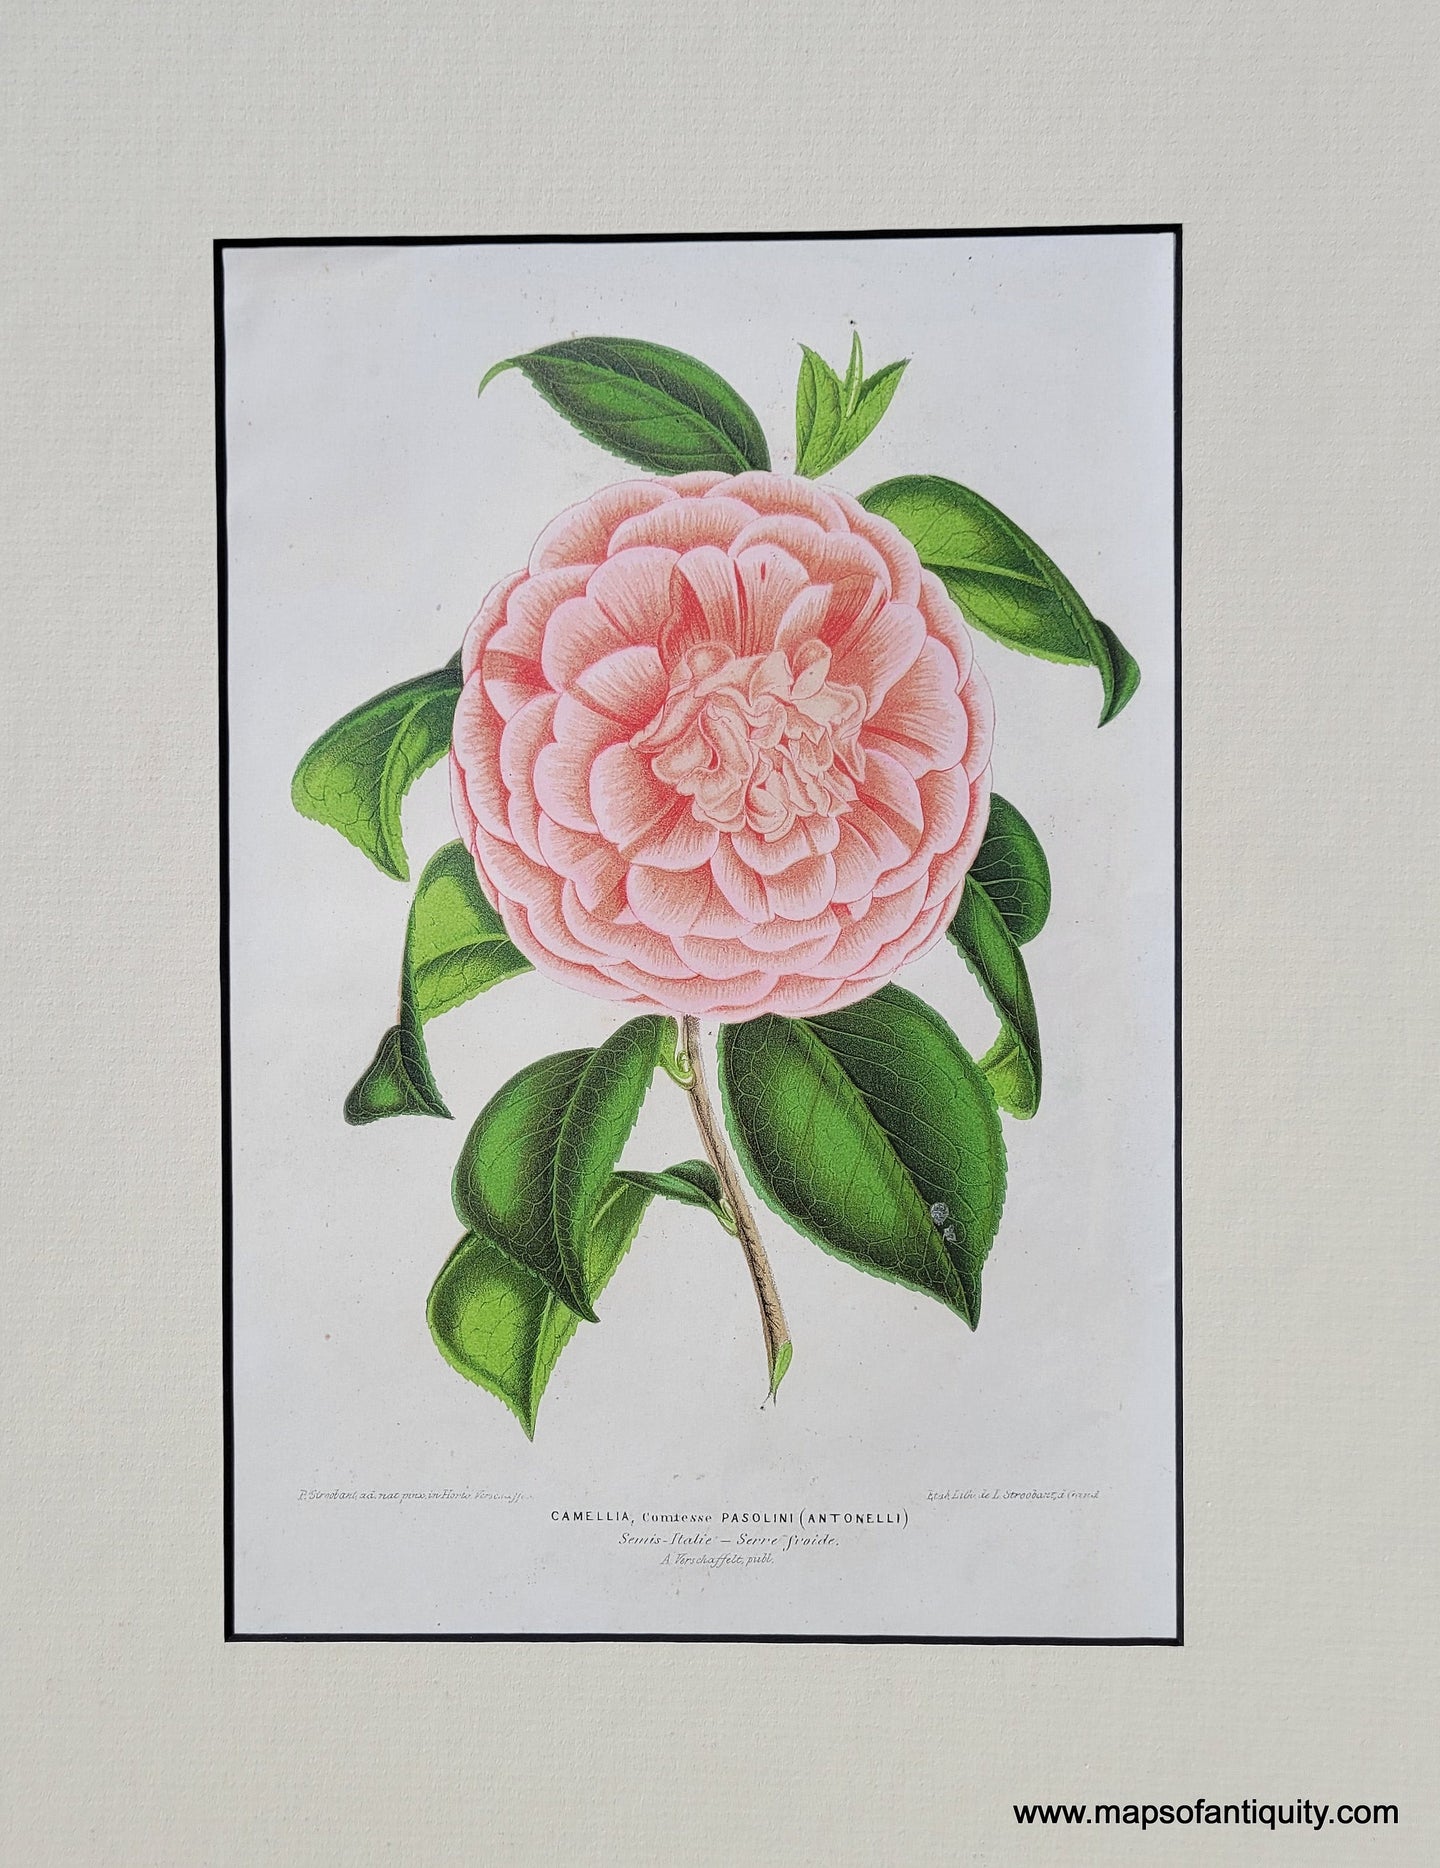 Genuine-Antique-Print-Camellia-Comtesse-Pasolini-1870-Ambroise-Verschaffelt-lIllustration-Horticole-Maps-Of-Antiquity